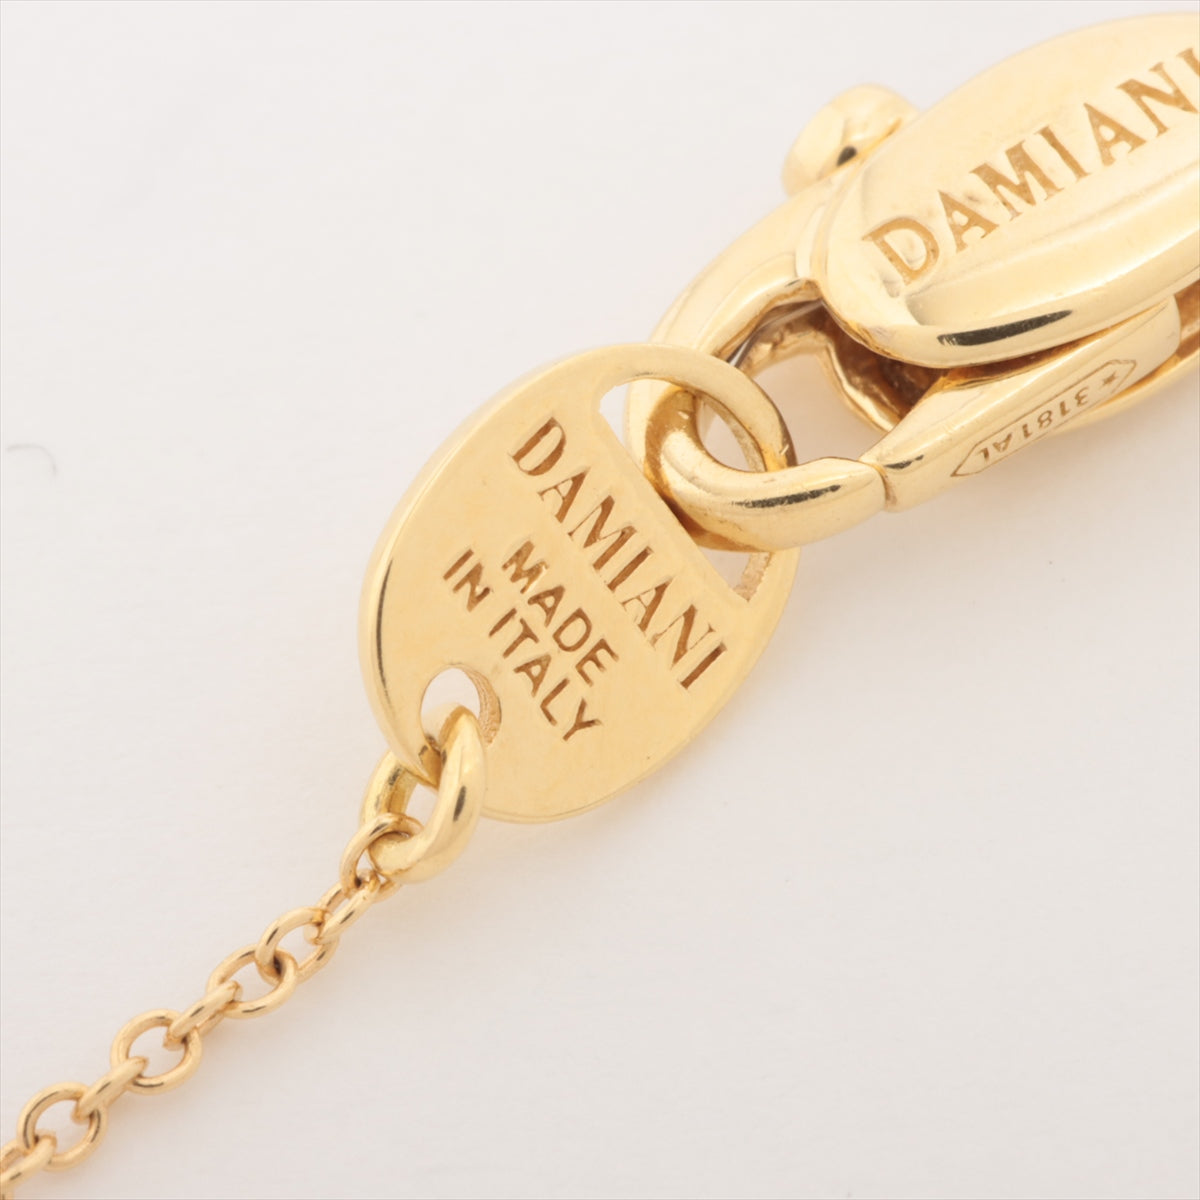 Damiani Belle Époque Cross Diamond Necklace 750(YG) 4.5g